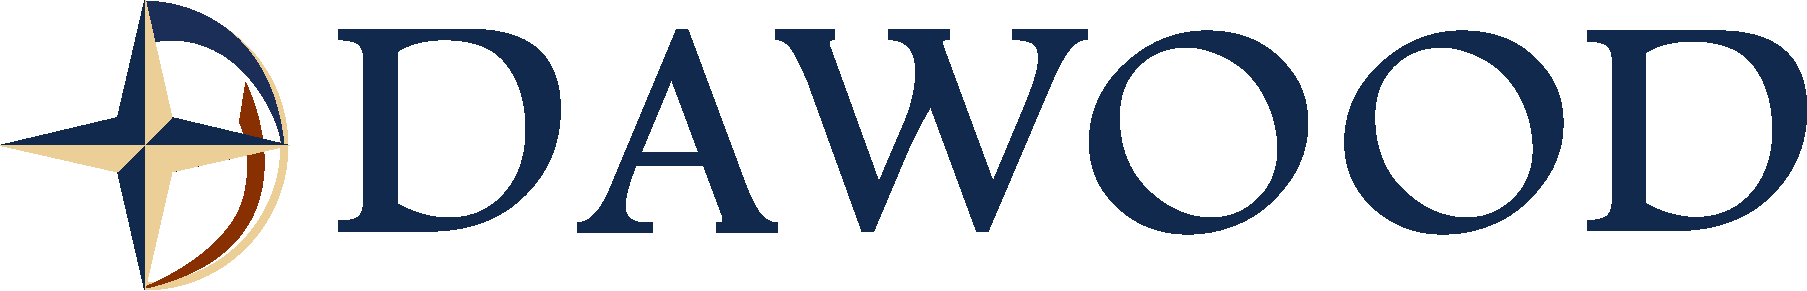 dawood logo